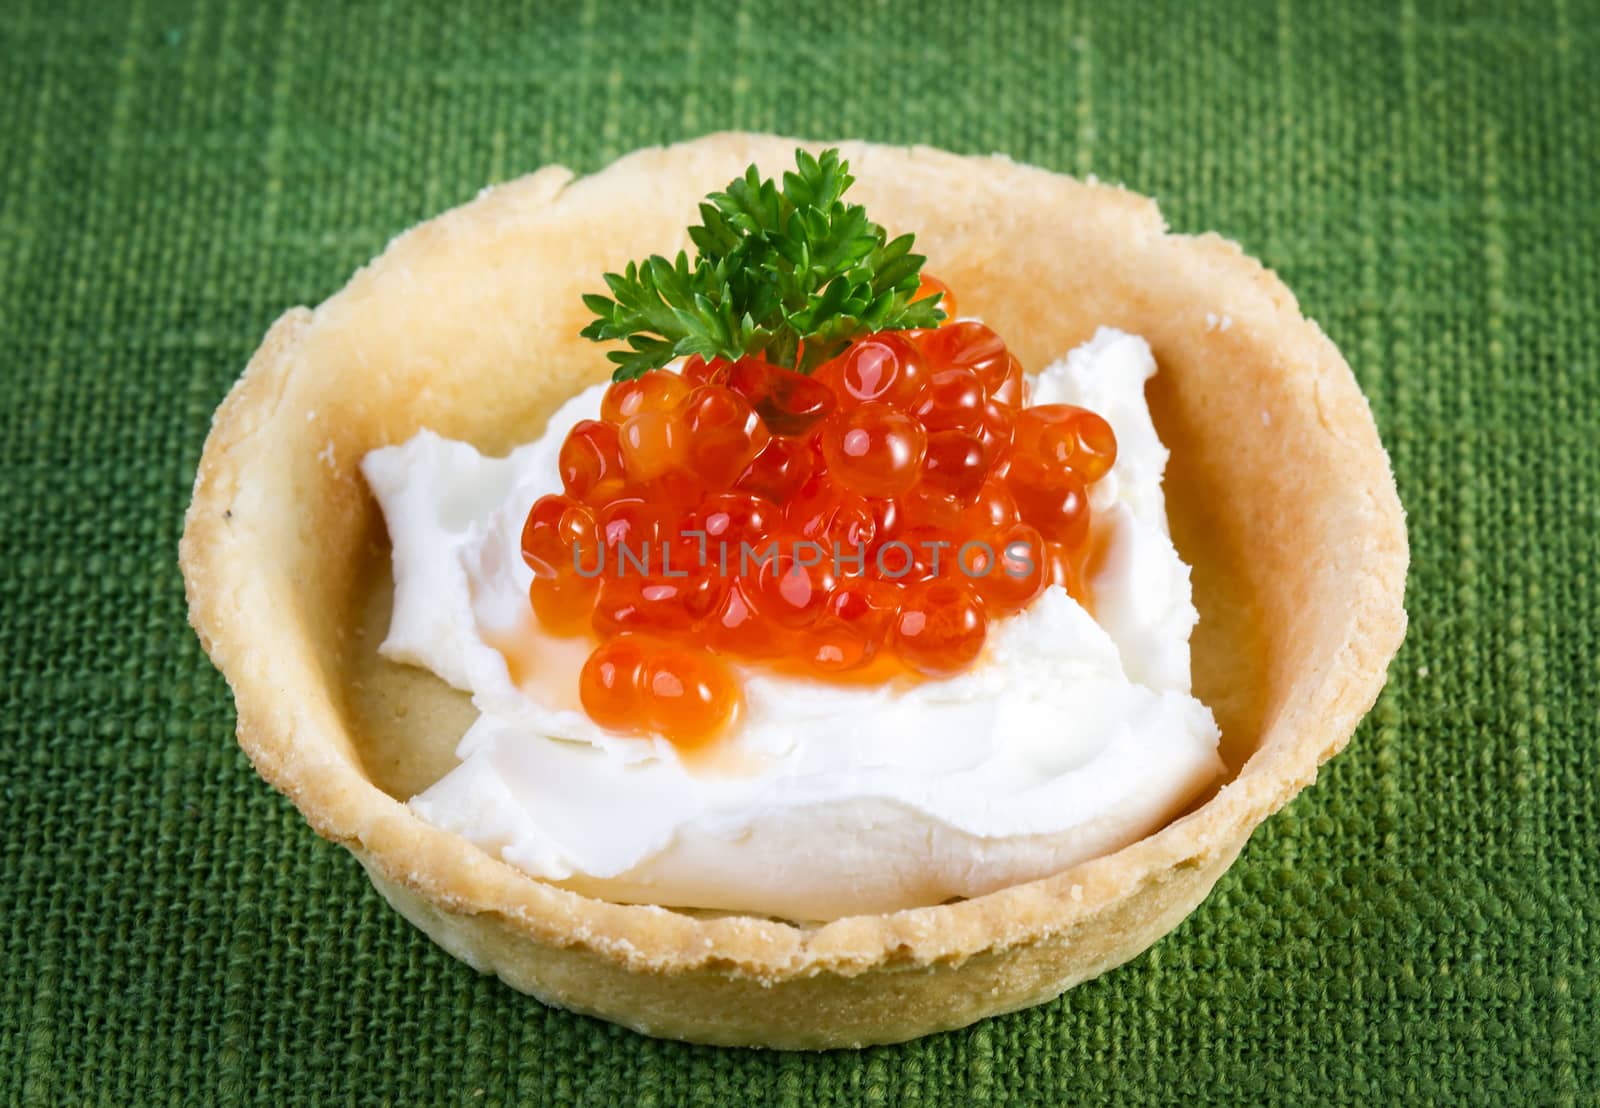 Caviar snack by Valengilda